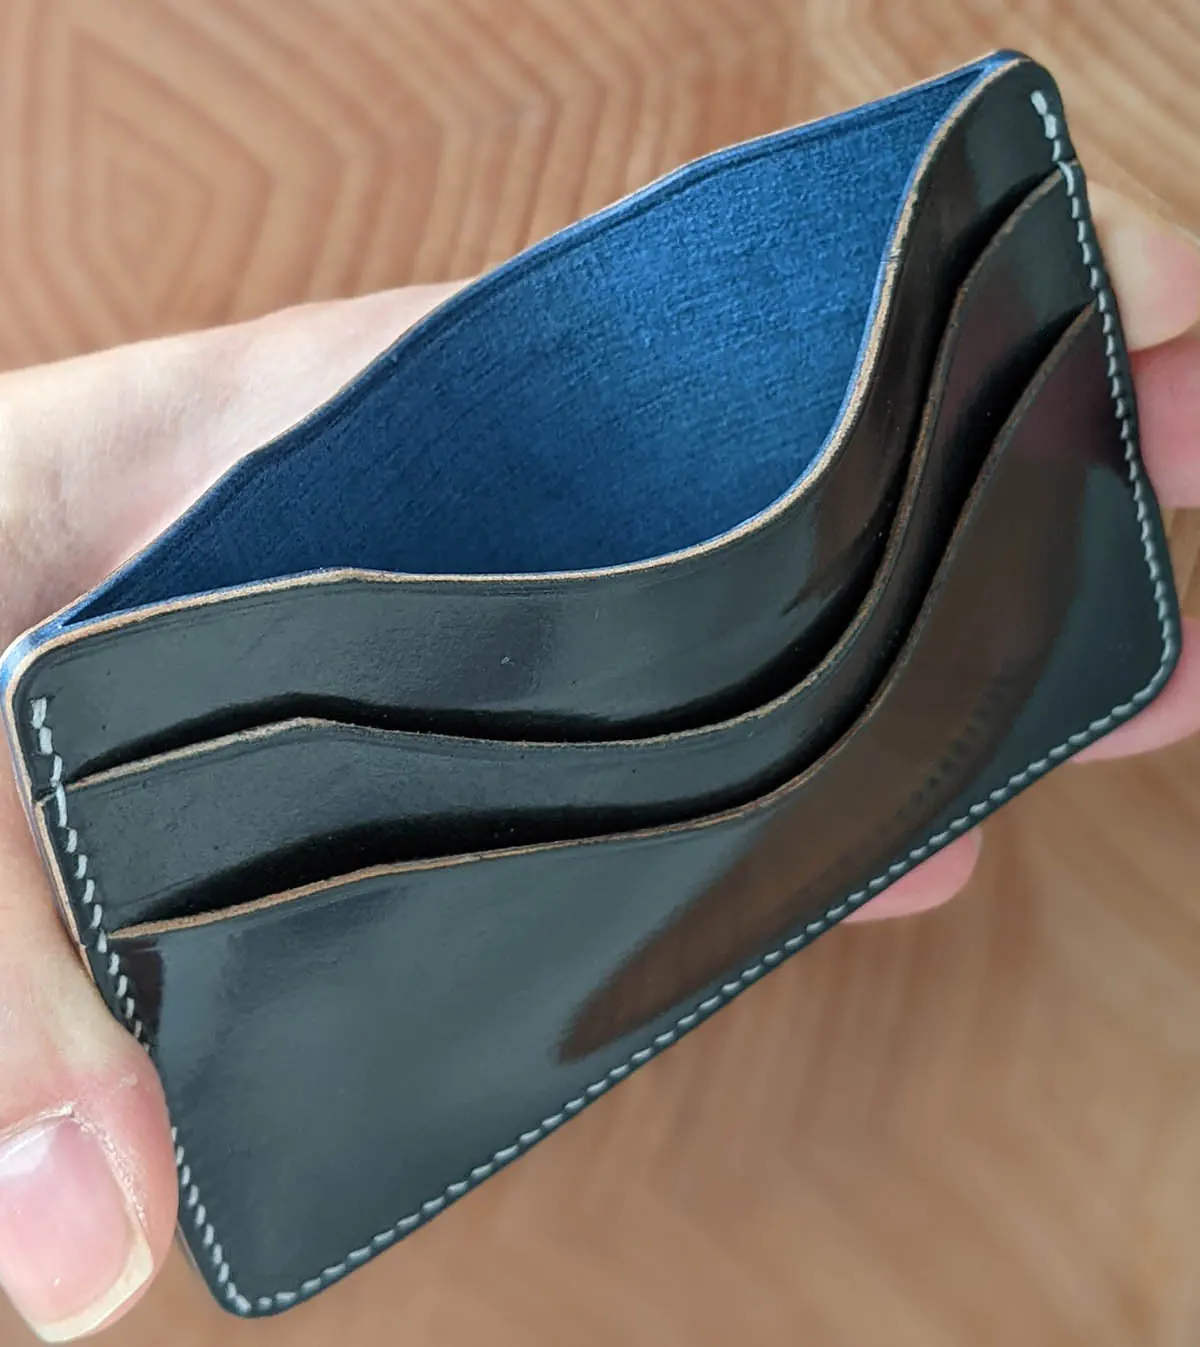 possala designs black glazed wallet with blue